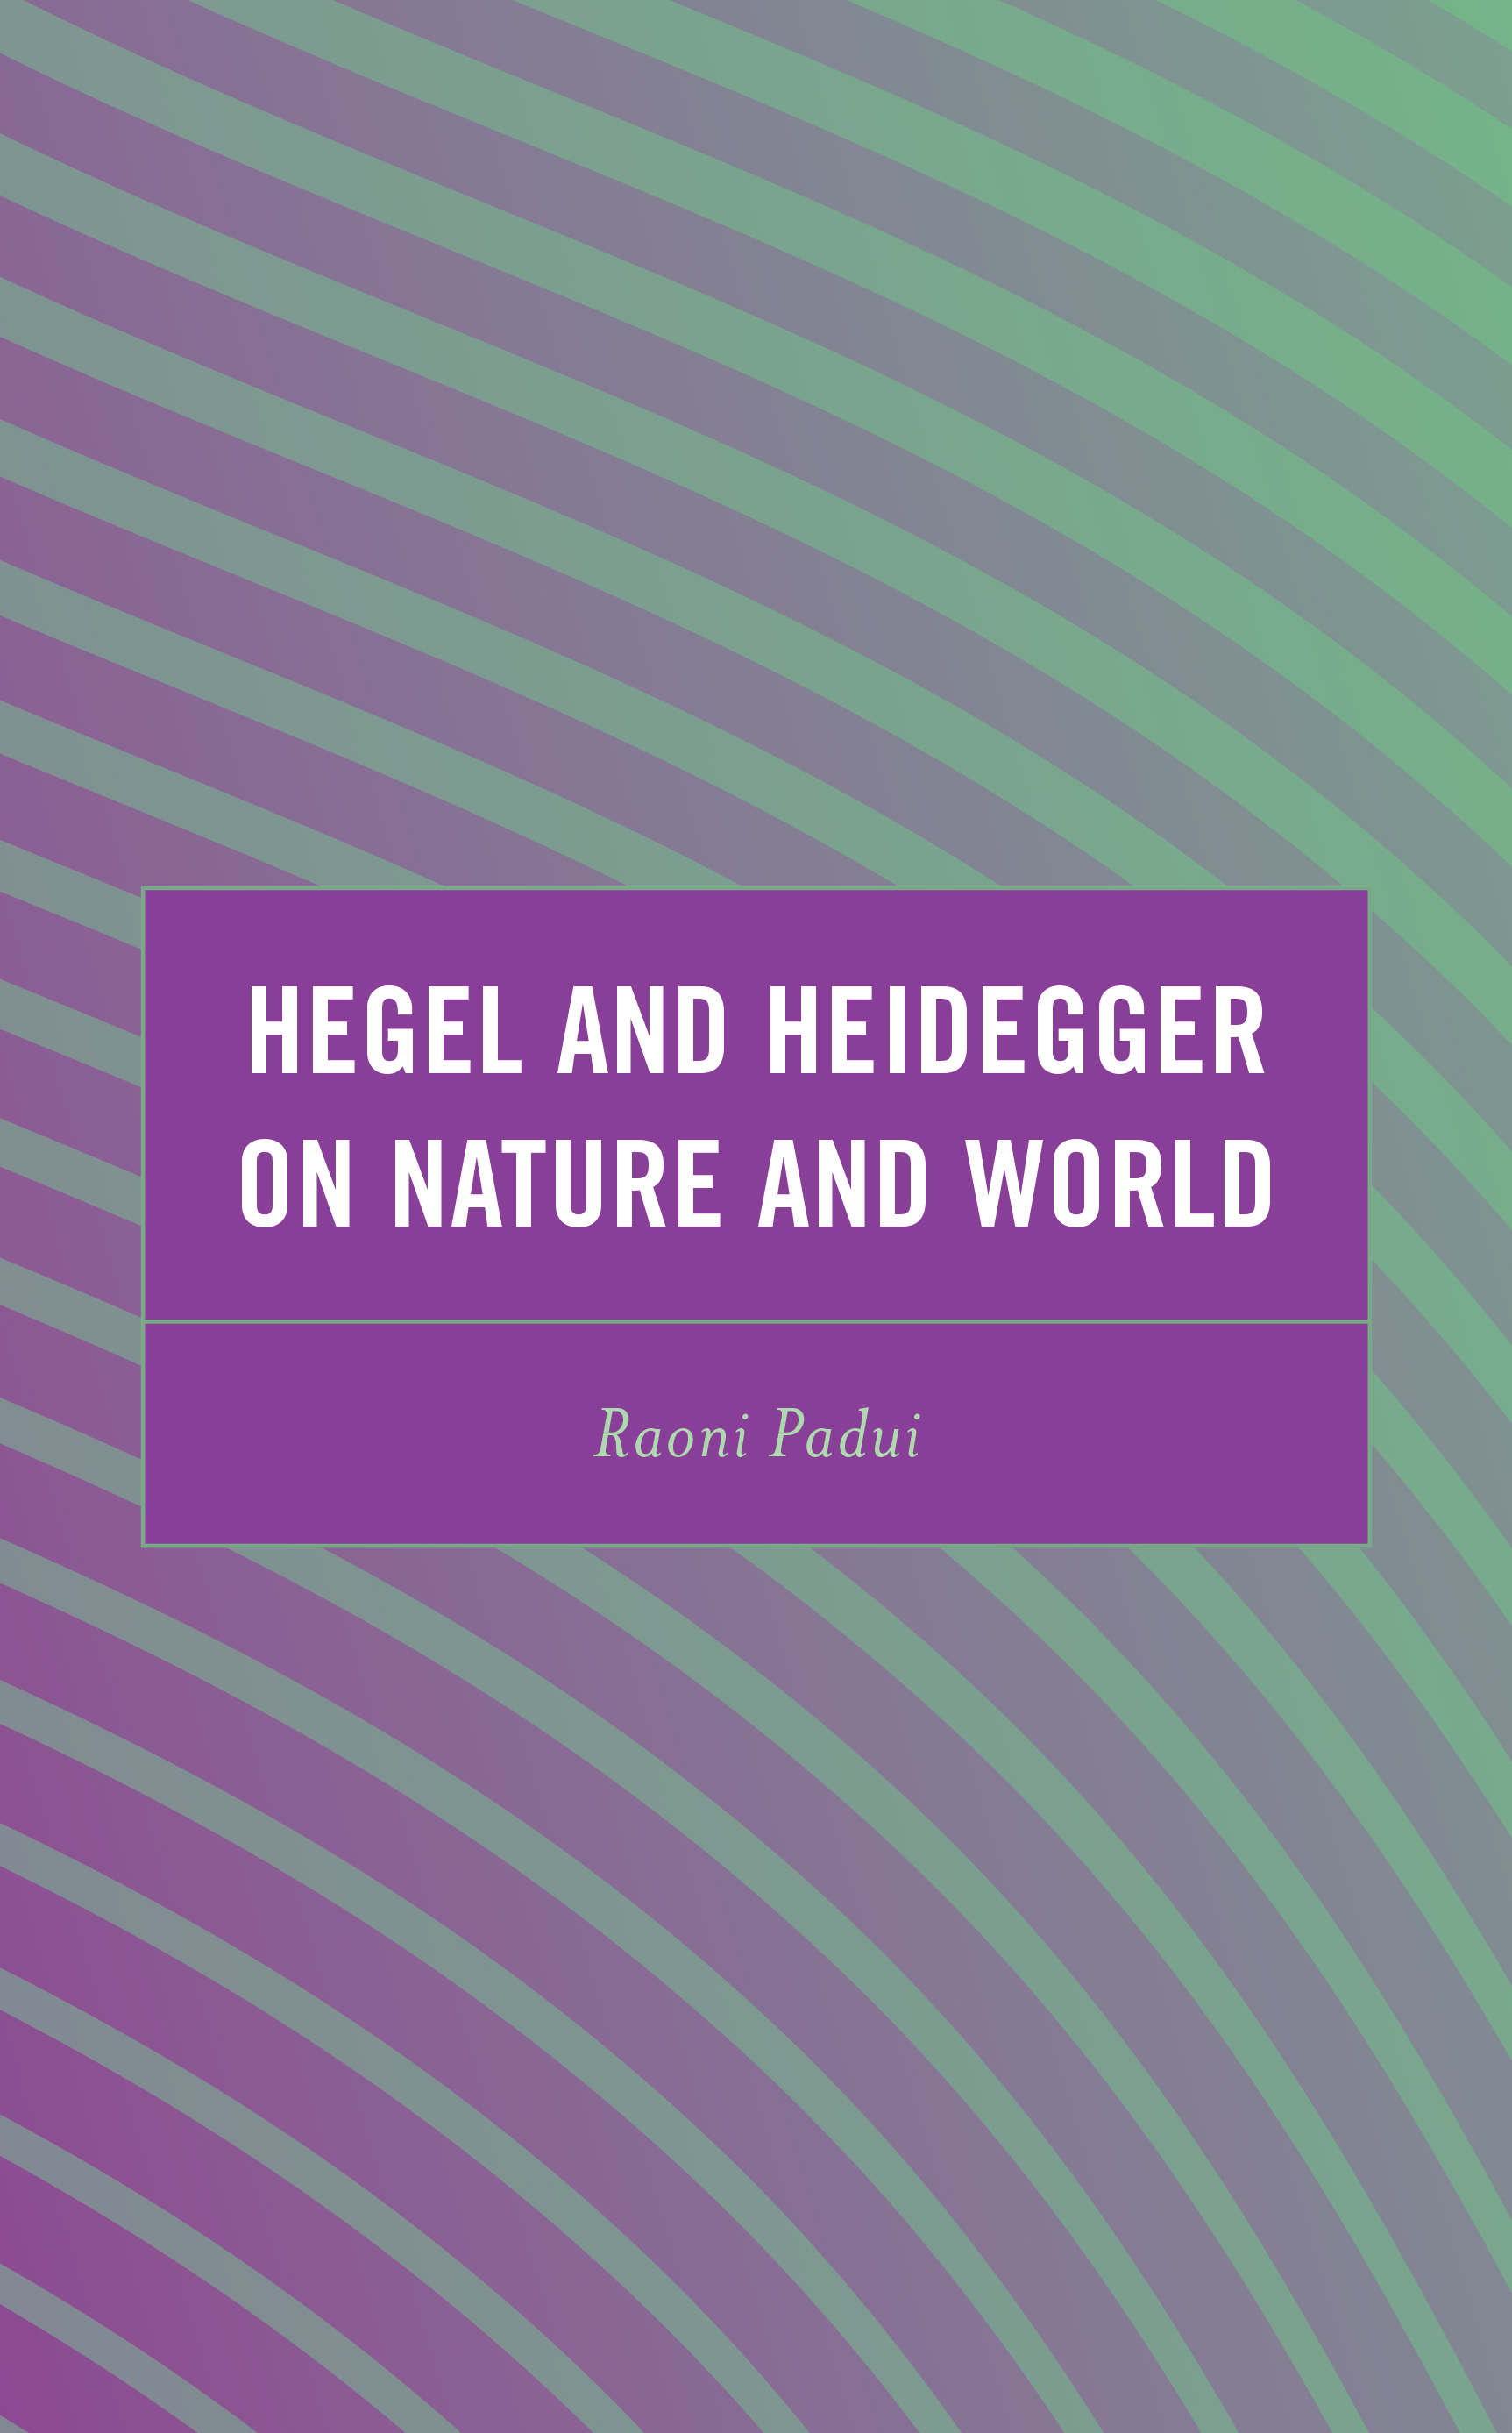 Hegel and Heidegger on Nature and World